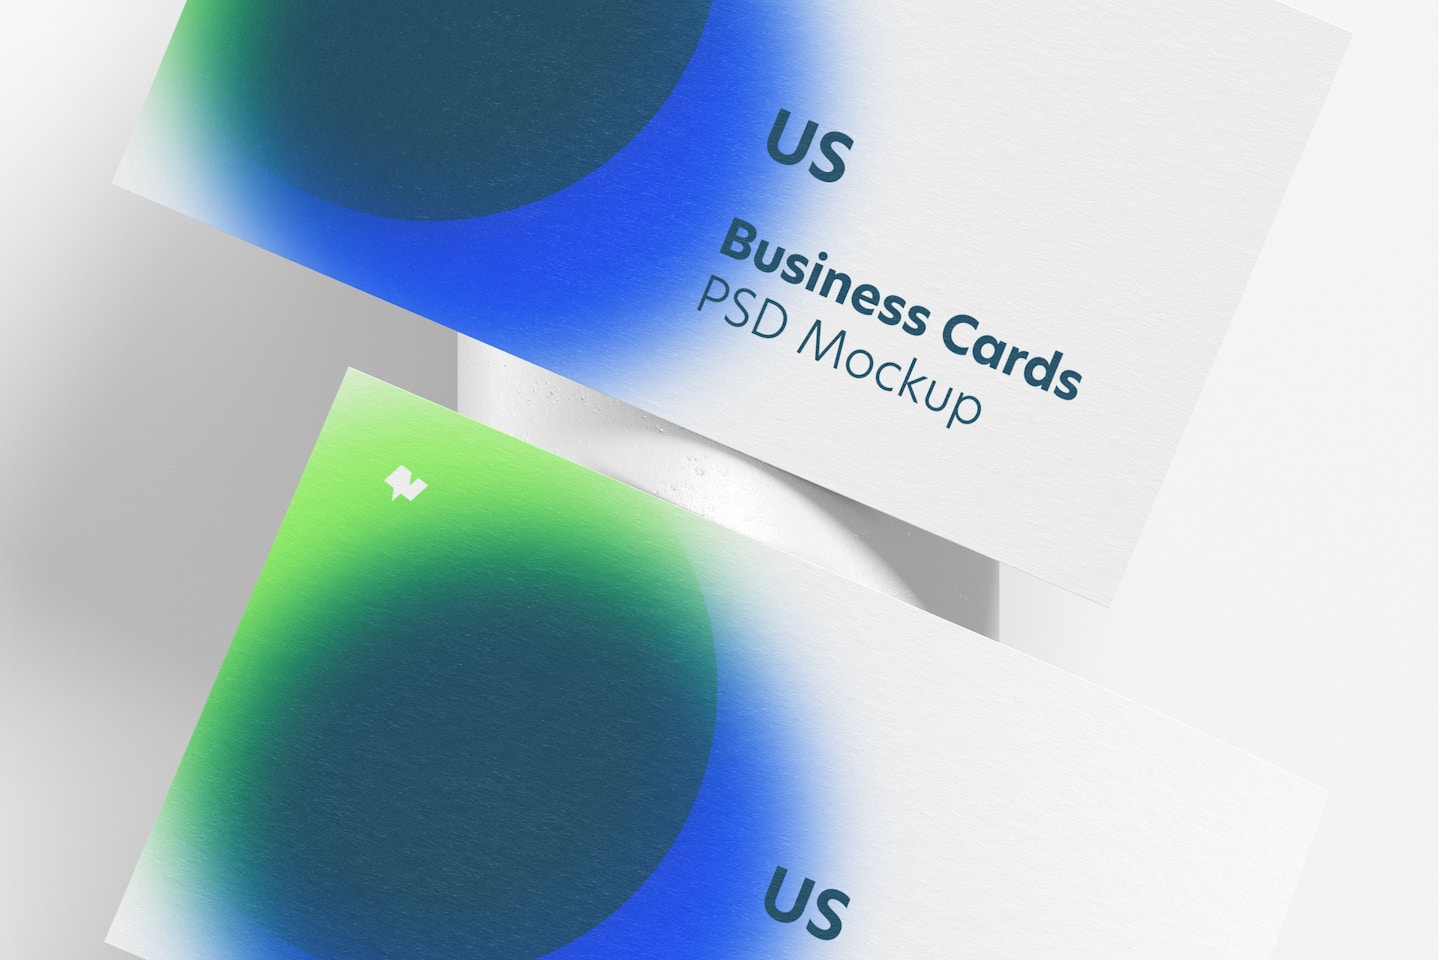 US Landscape Business Cards Mockup, Top View